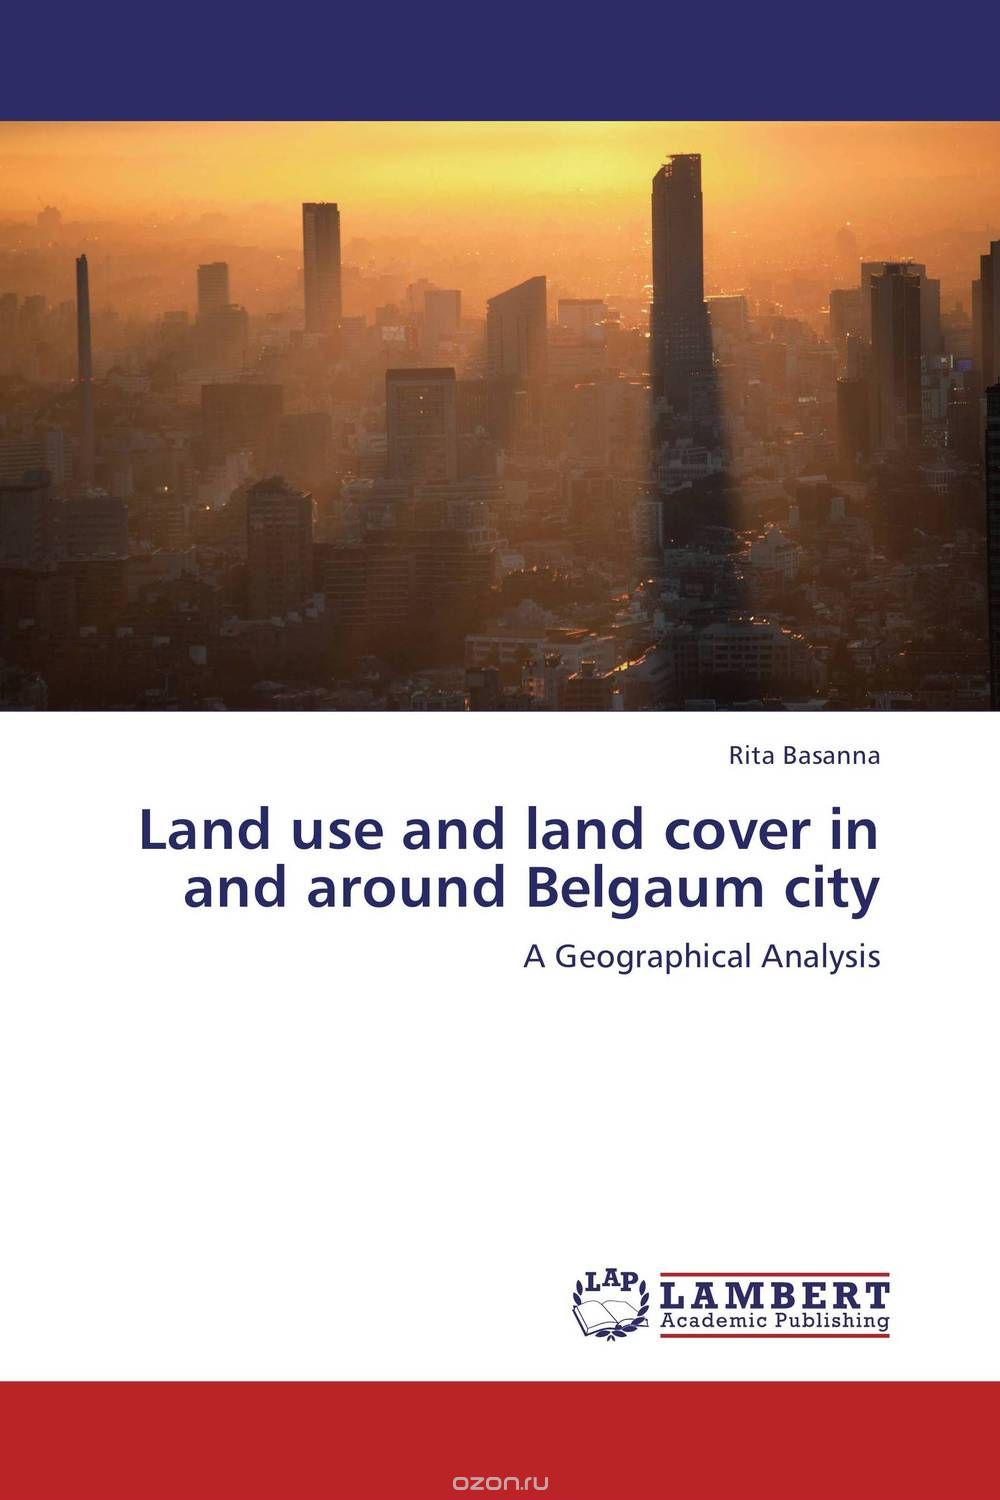 Скачать книгу "Land use and land cover in and around Belgaum city"